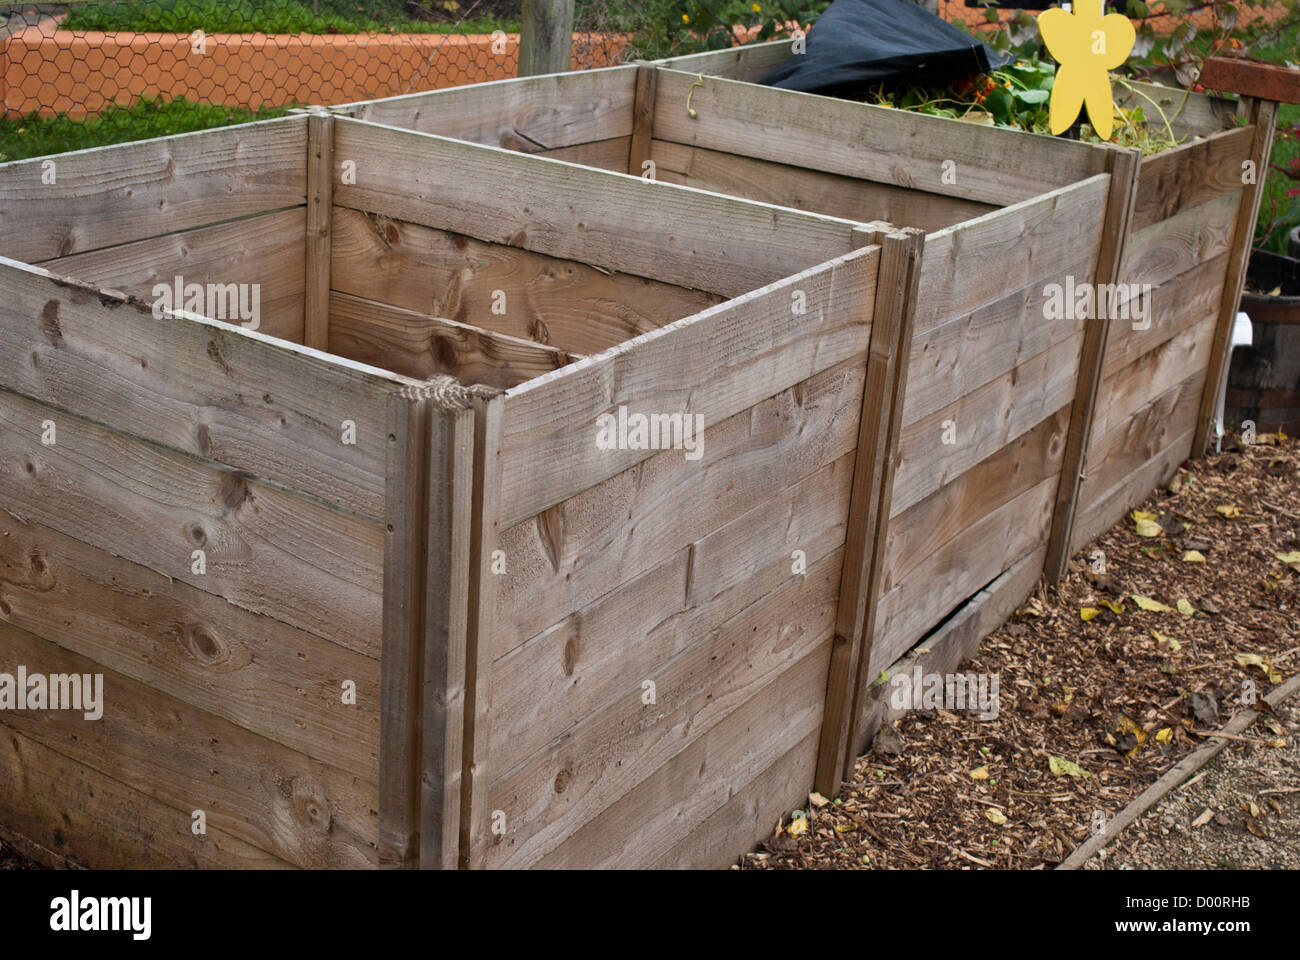 A wooden three bay compost bin Stock Photo